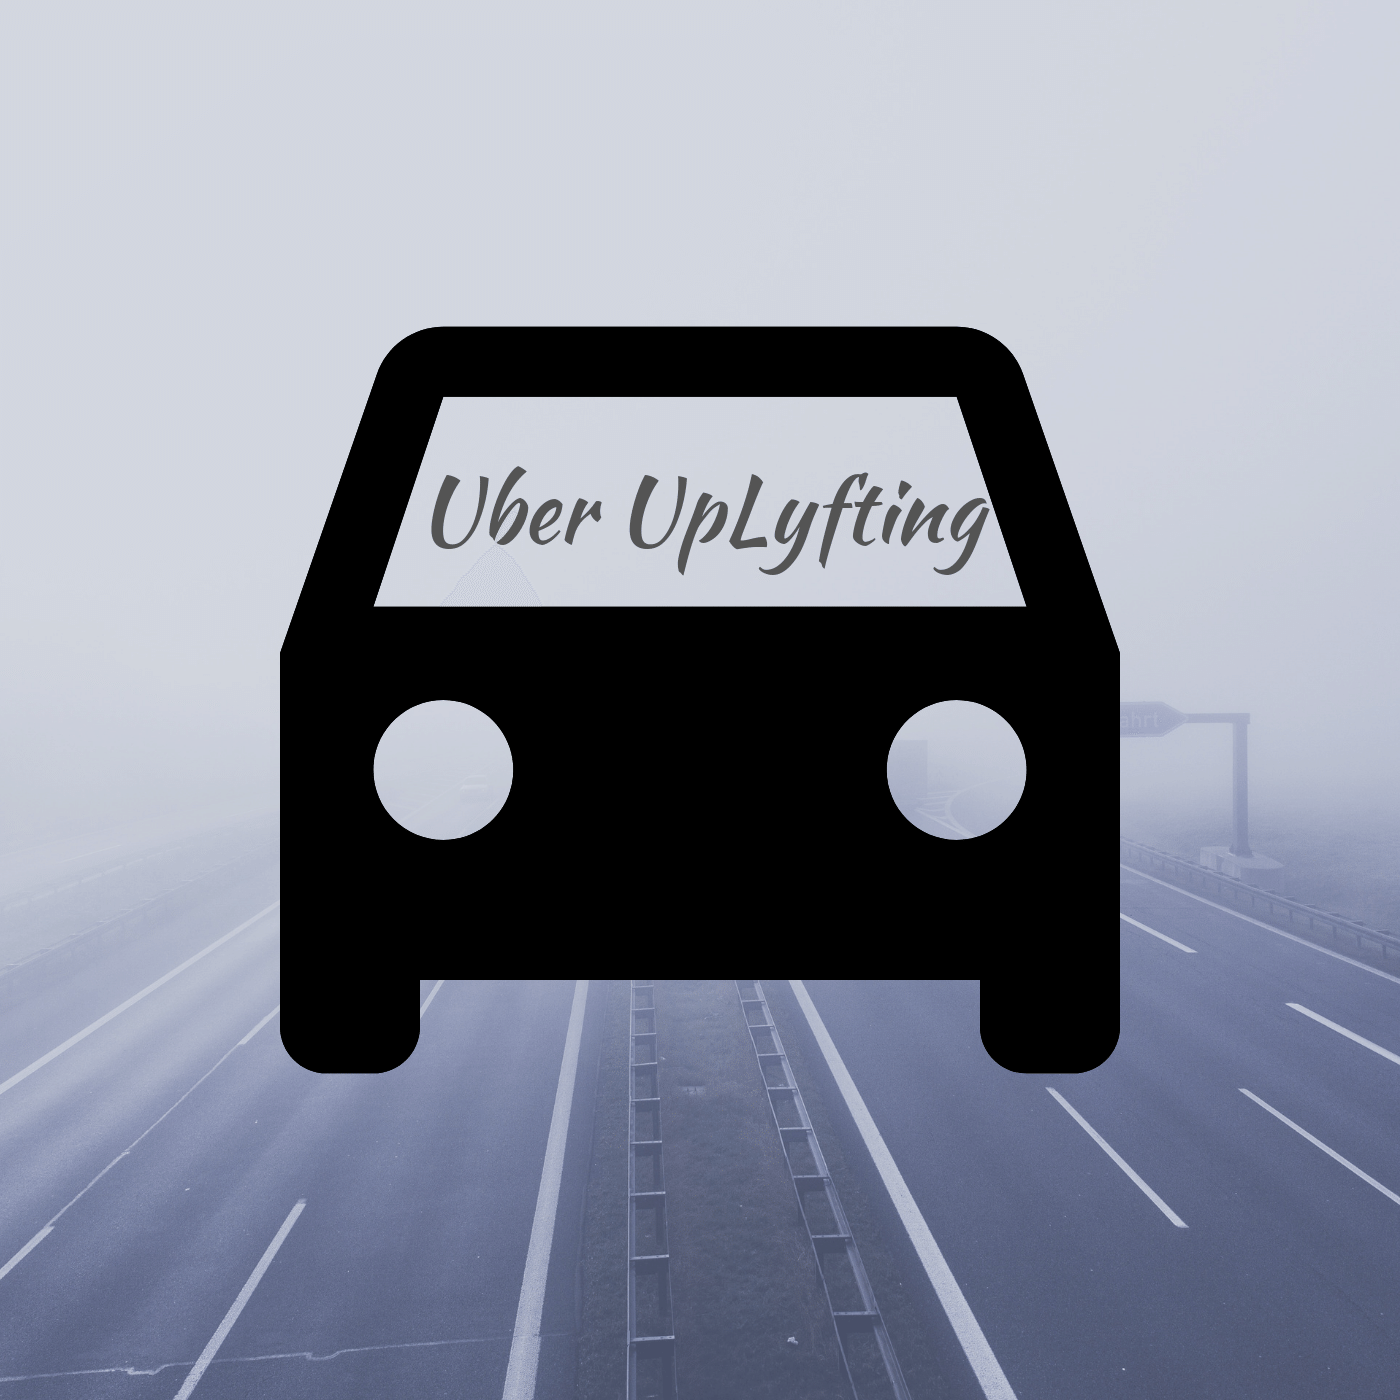 Uber UpLyfting